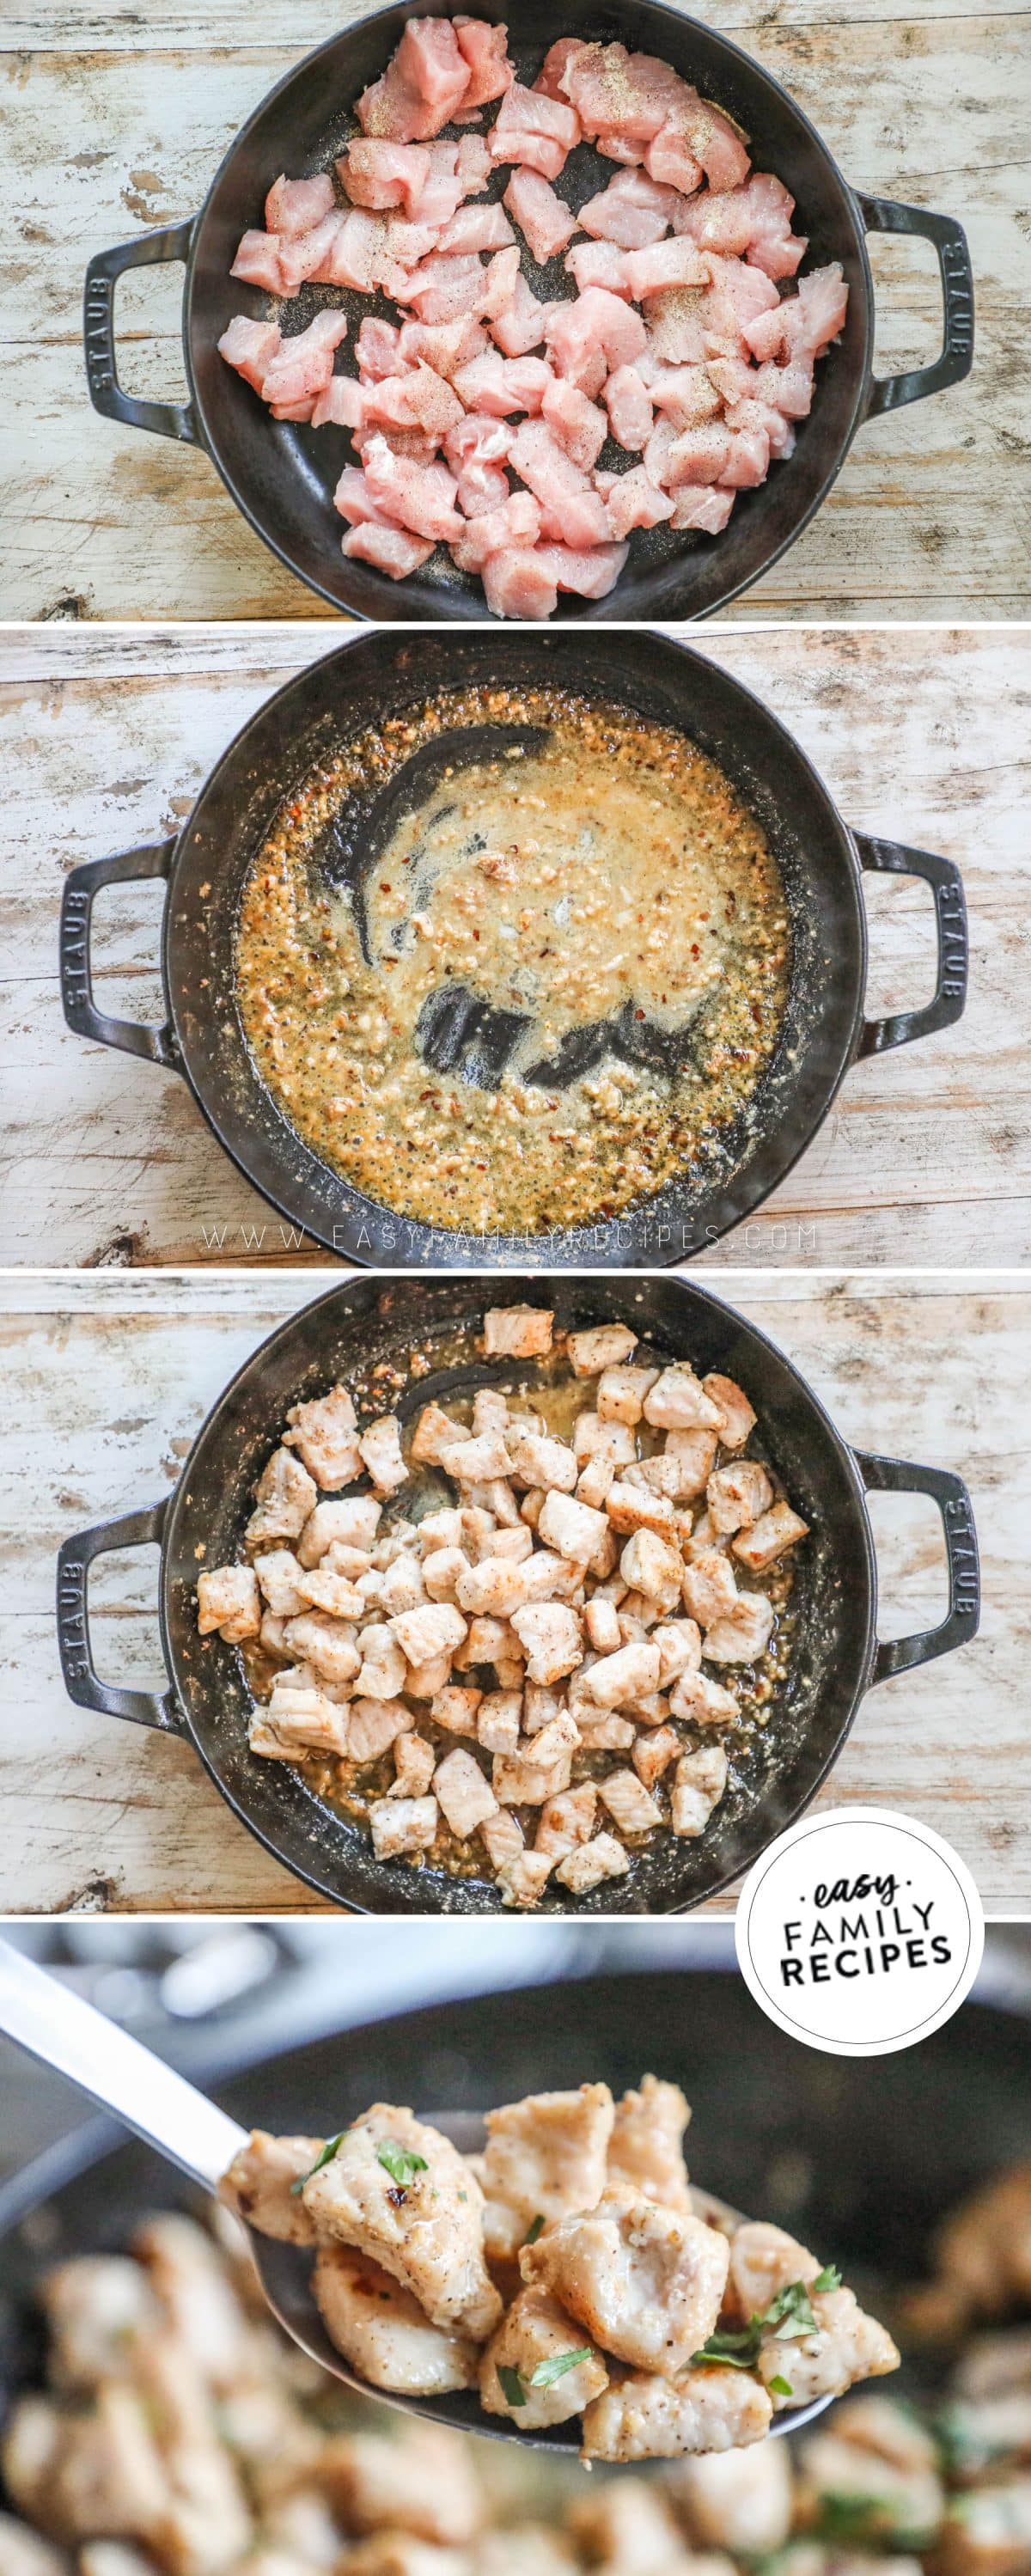 how to cook garlic pork bites 1)cook pork 2)make garlic butter 3)toss to coat 4)serve.